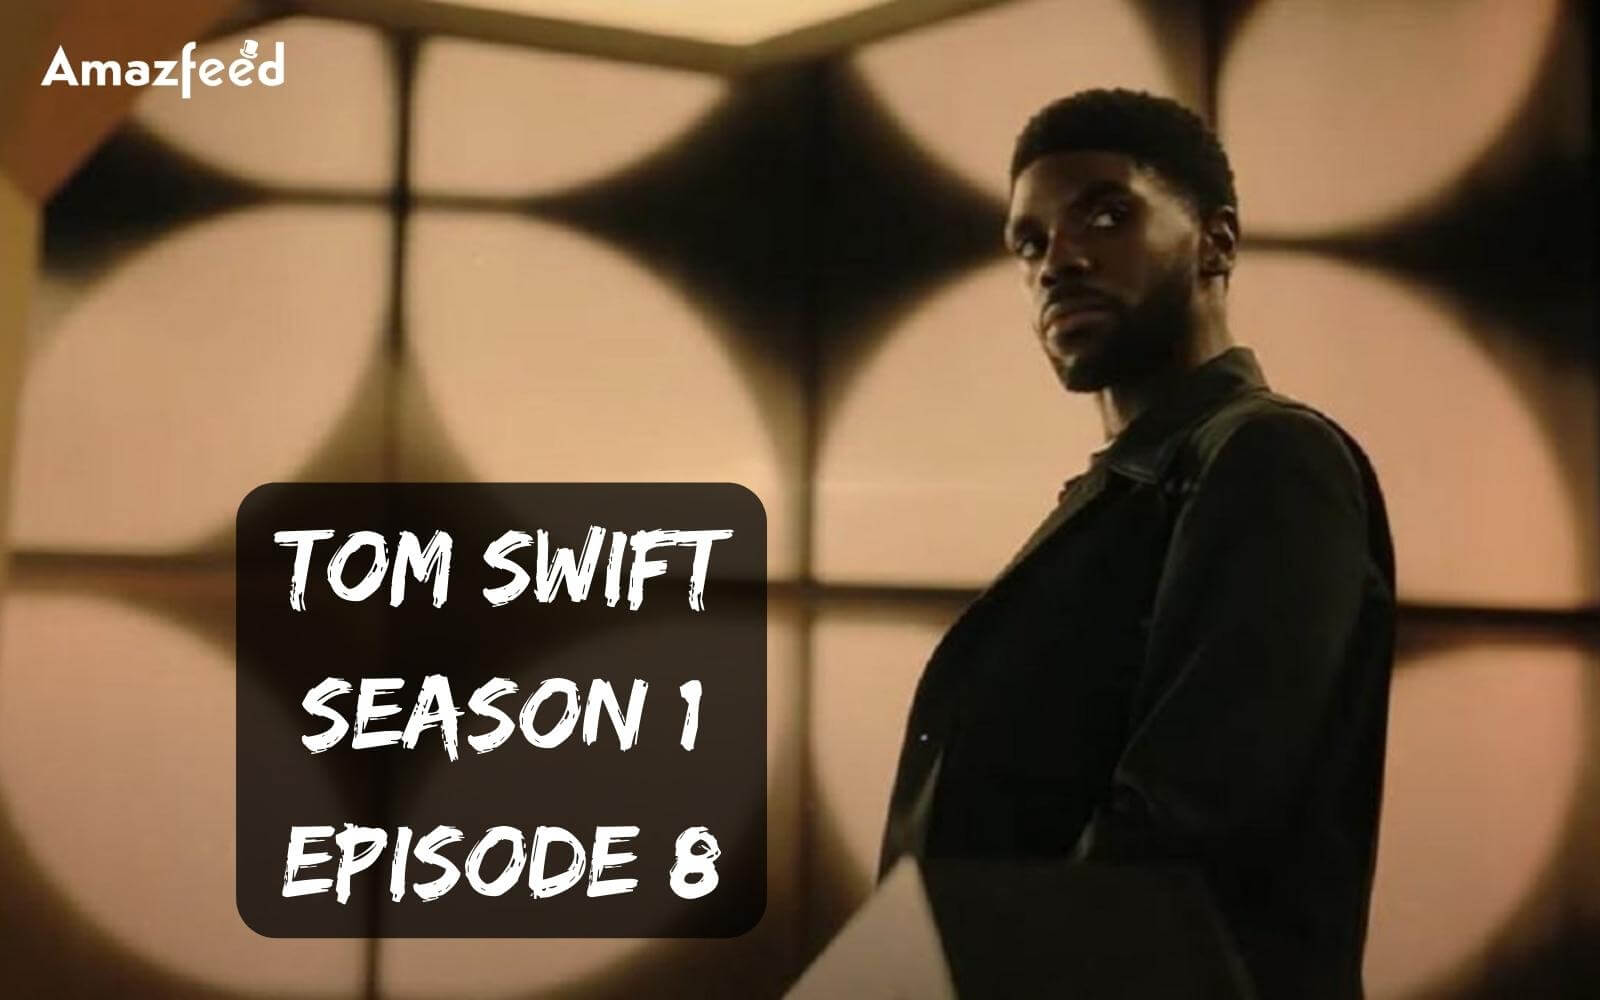 Tom Swift Season 1 Episode 8 ⇒ Countdown, Release Date, Spoilers, Recap, & Trailer